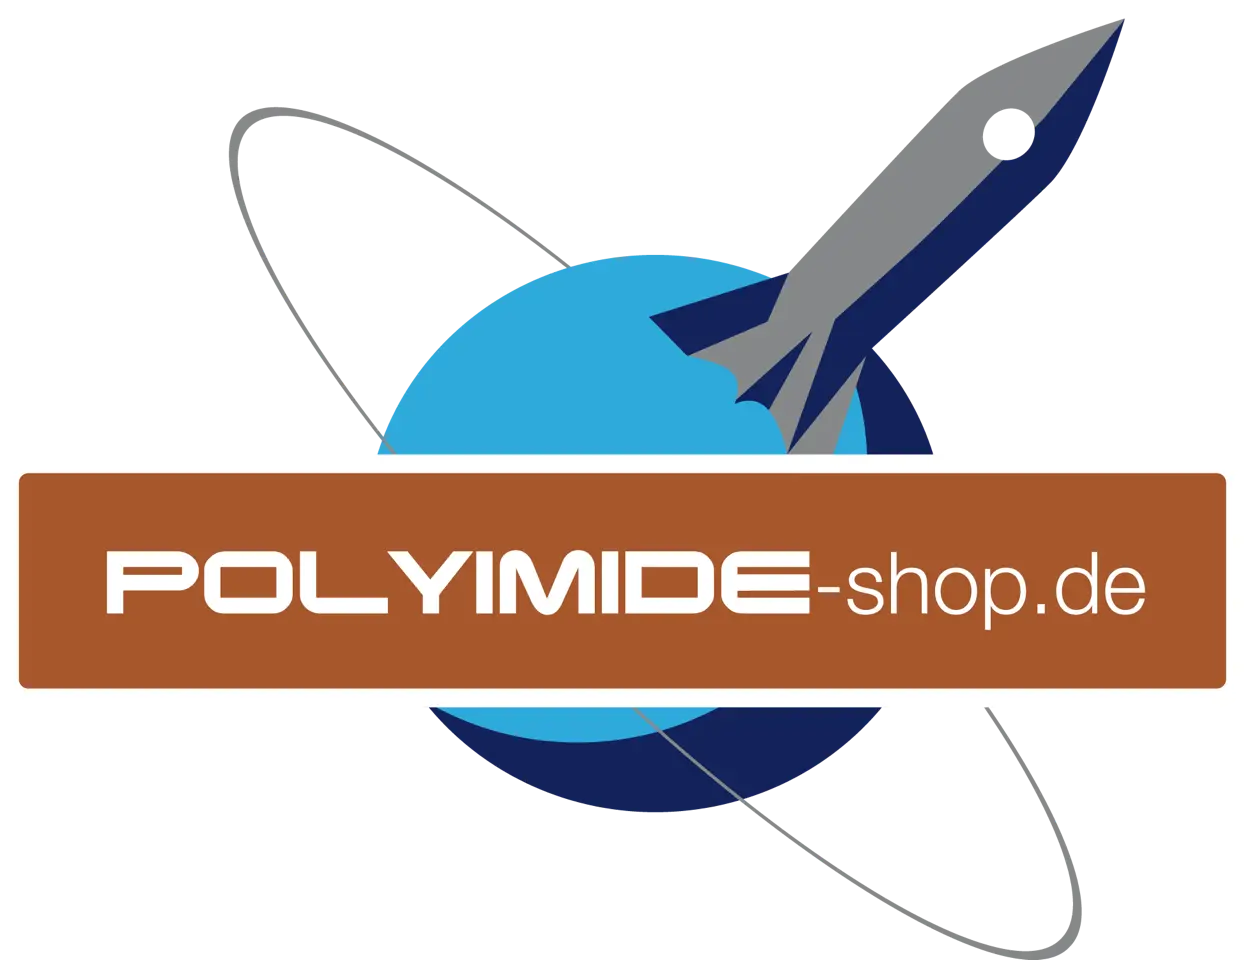 POLYIMIDE-shop.de Logo"